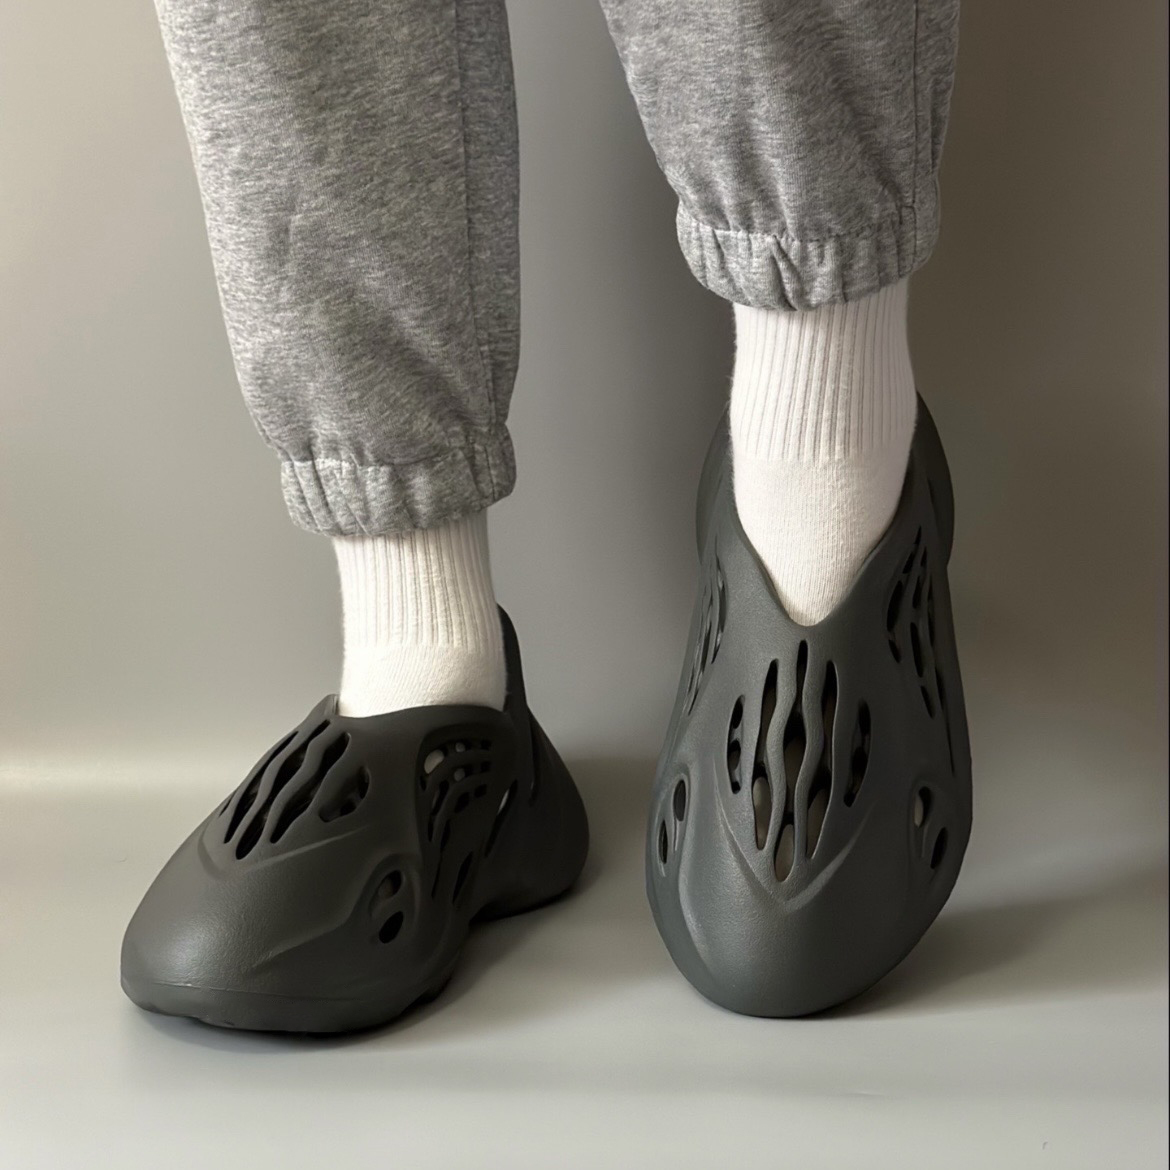 Adidas OG Yeezy Foam Runner 碳灰洞洞鞋IG5349